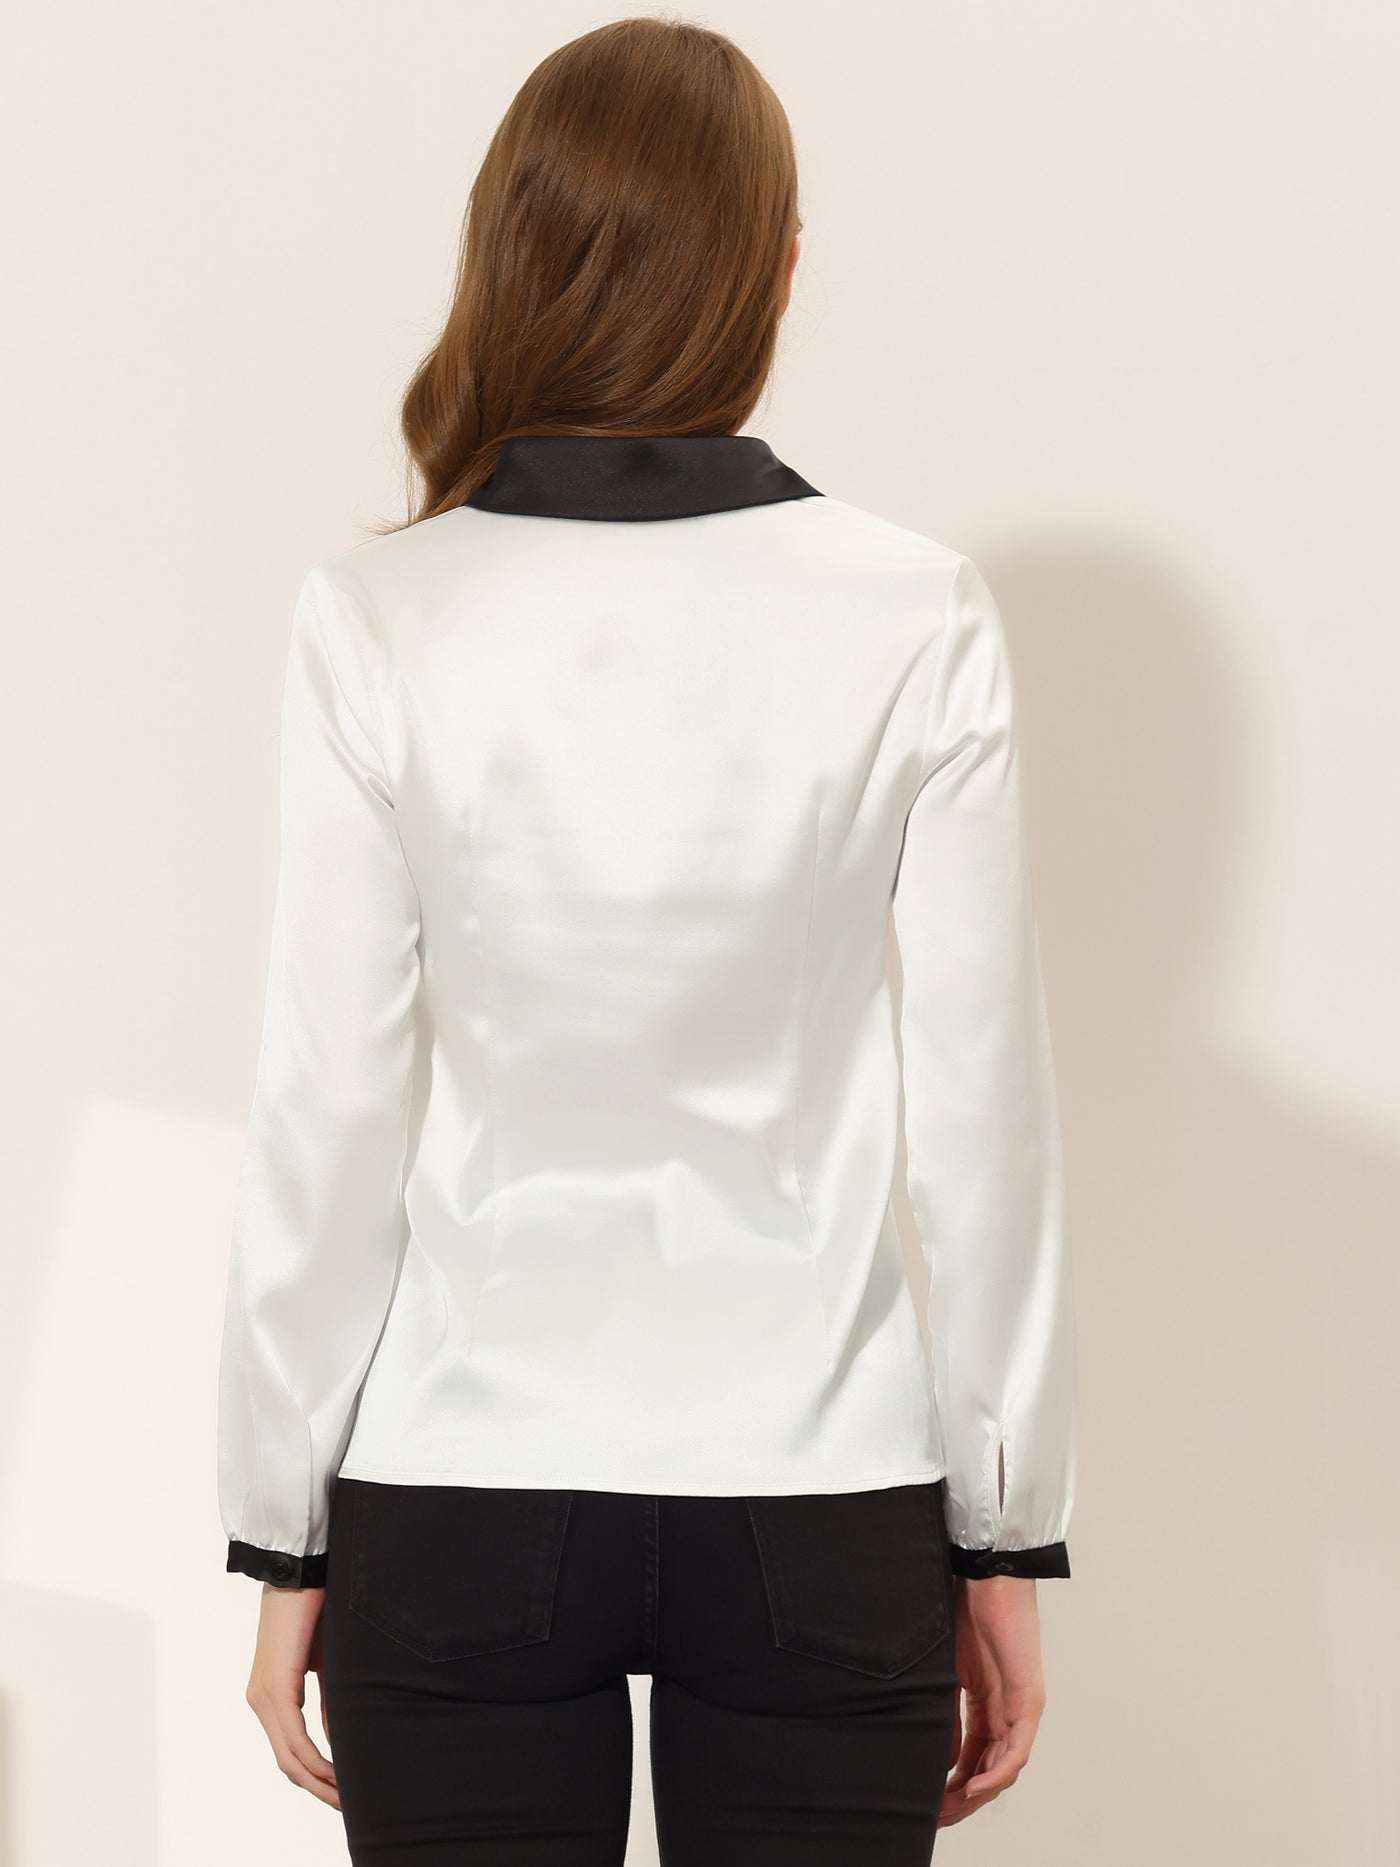 Allegra K Button Up Shirt Contrast Collared Long Sleeve Satin Work Top